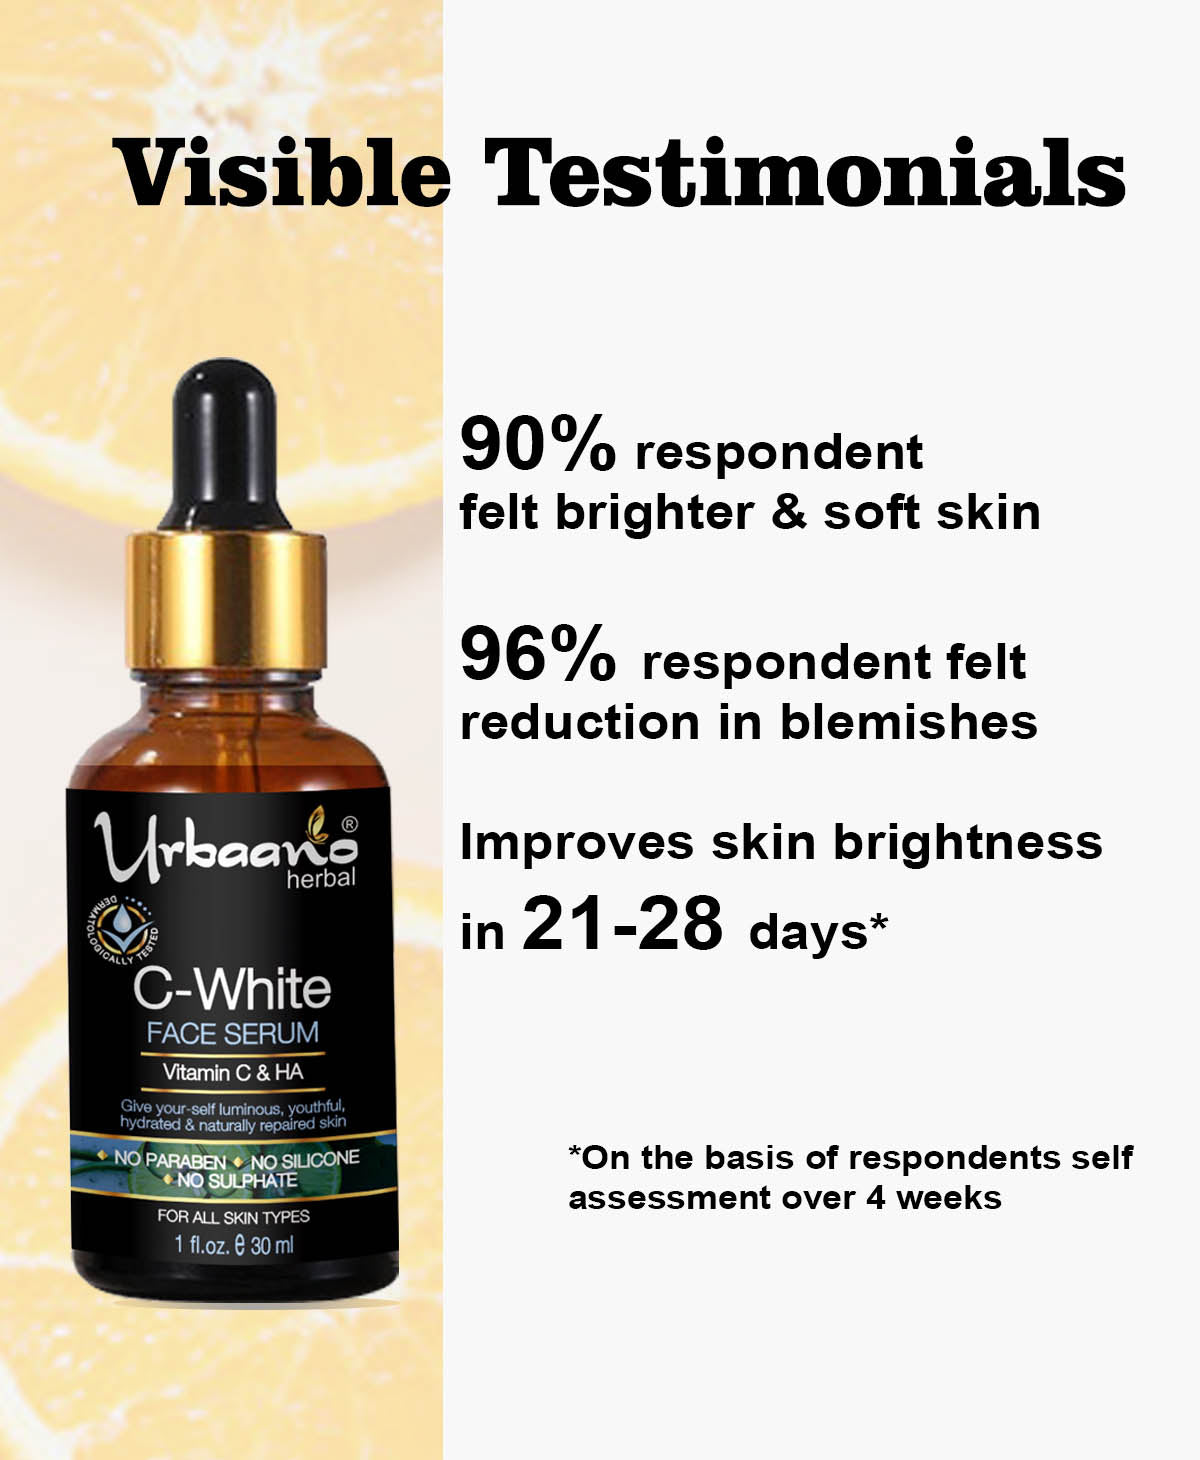 urbaano herbal skin lightening serum feed back for blemishes, brightness, soft skin